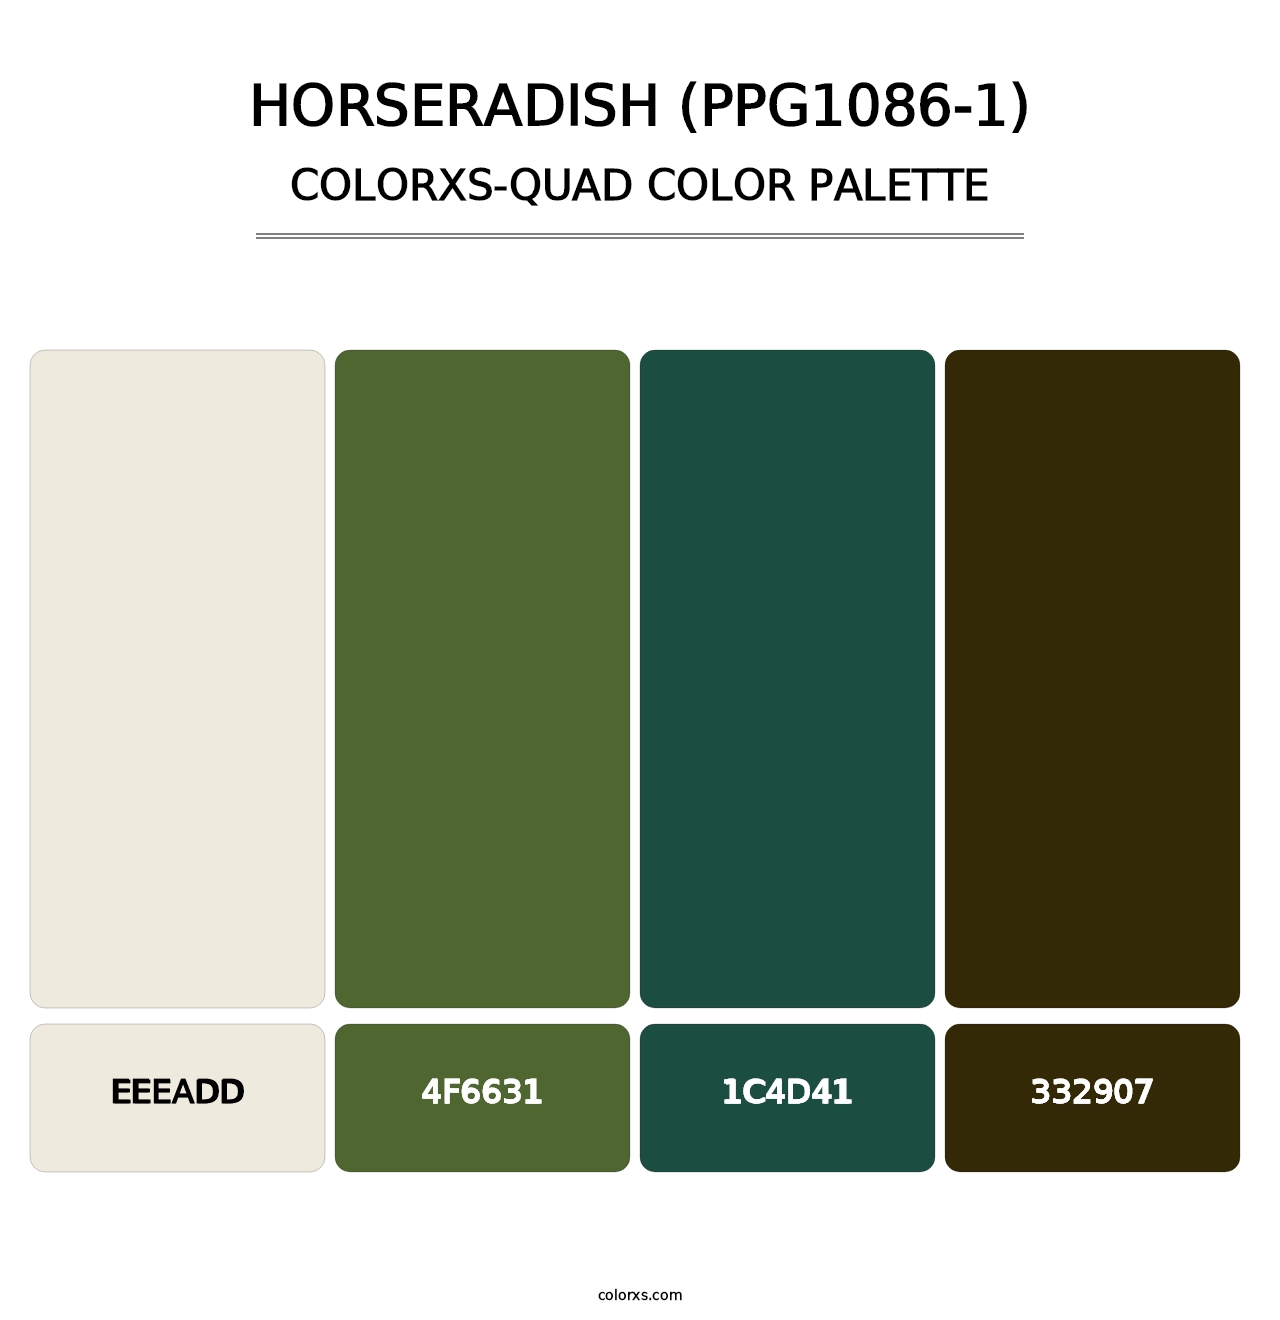 Horseradish (PPG1086-1) - Colorxs Quad Palette